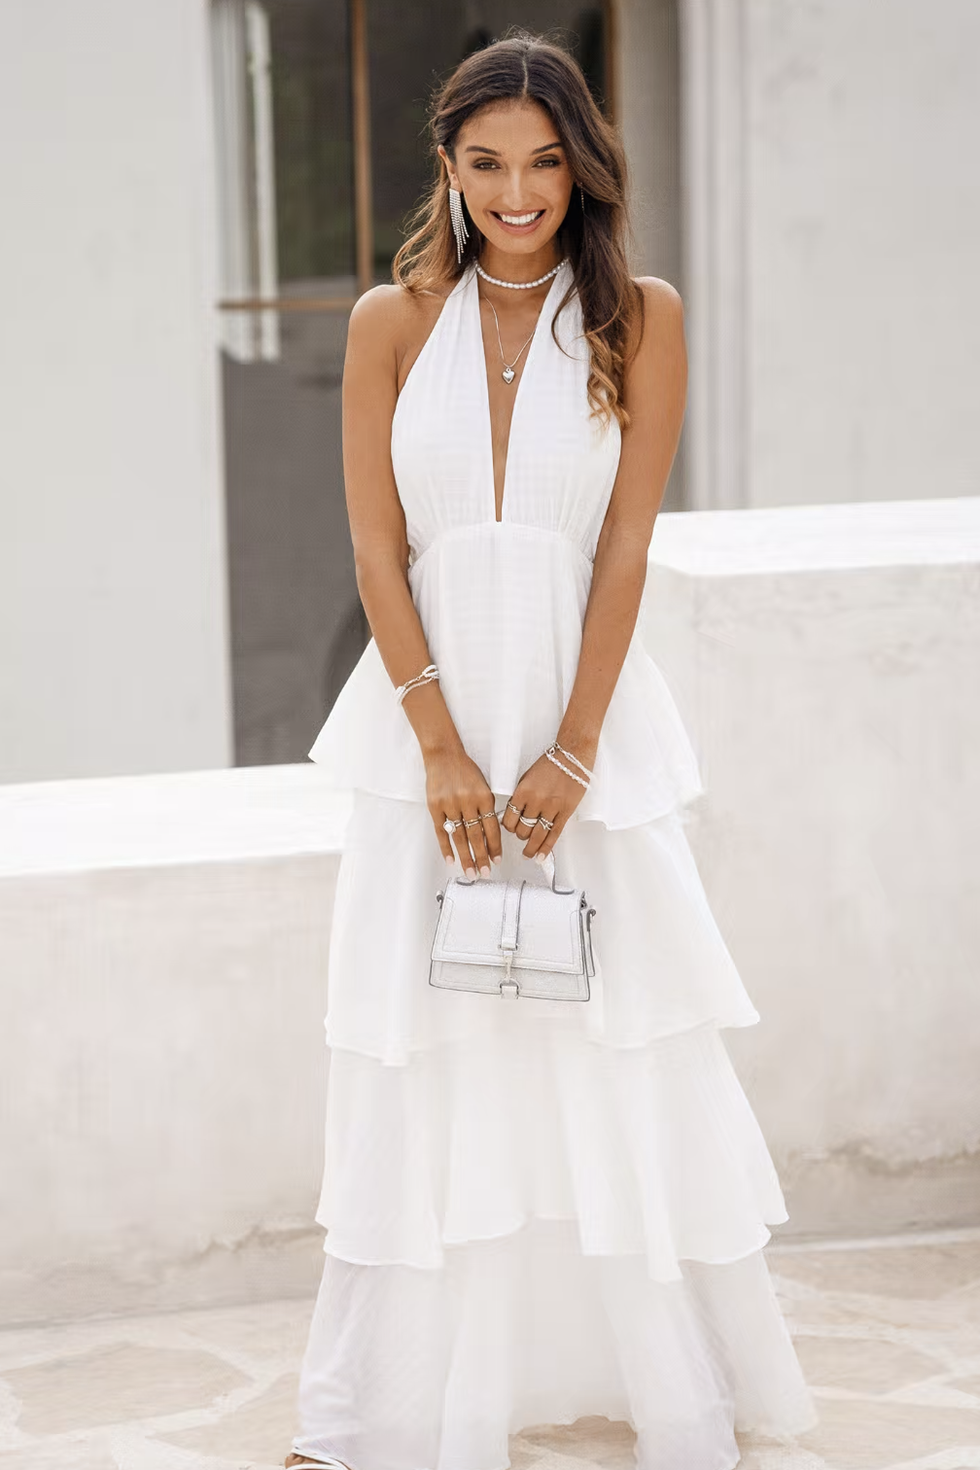 Shop Dupes for Simone Biles' All-White Tier Wedding Dress